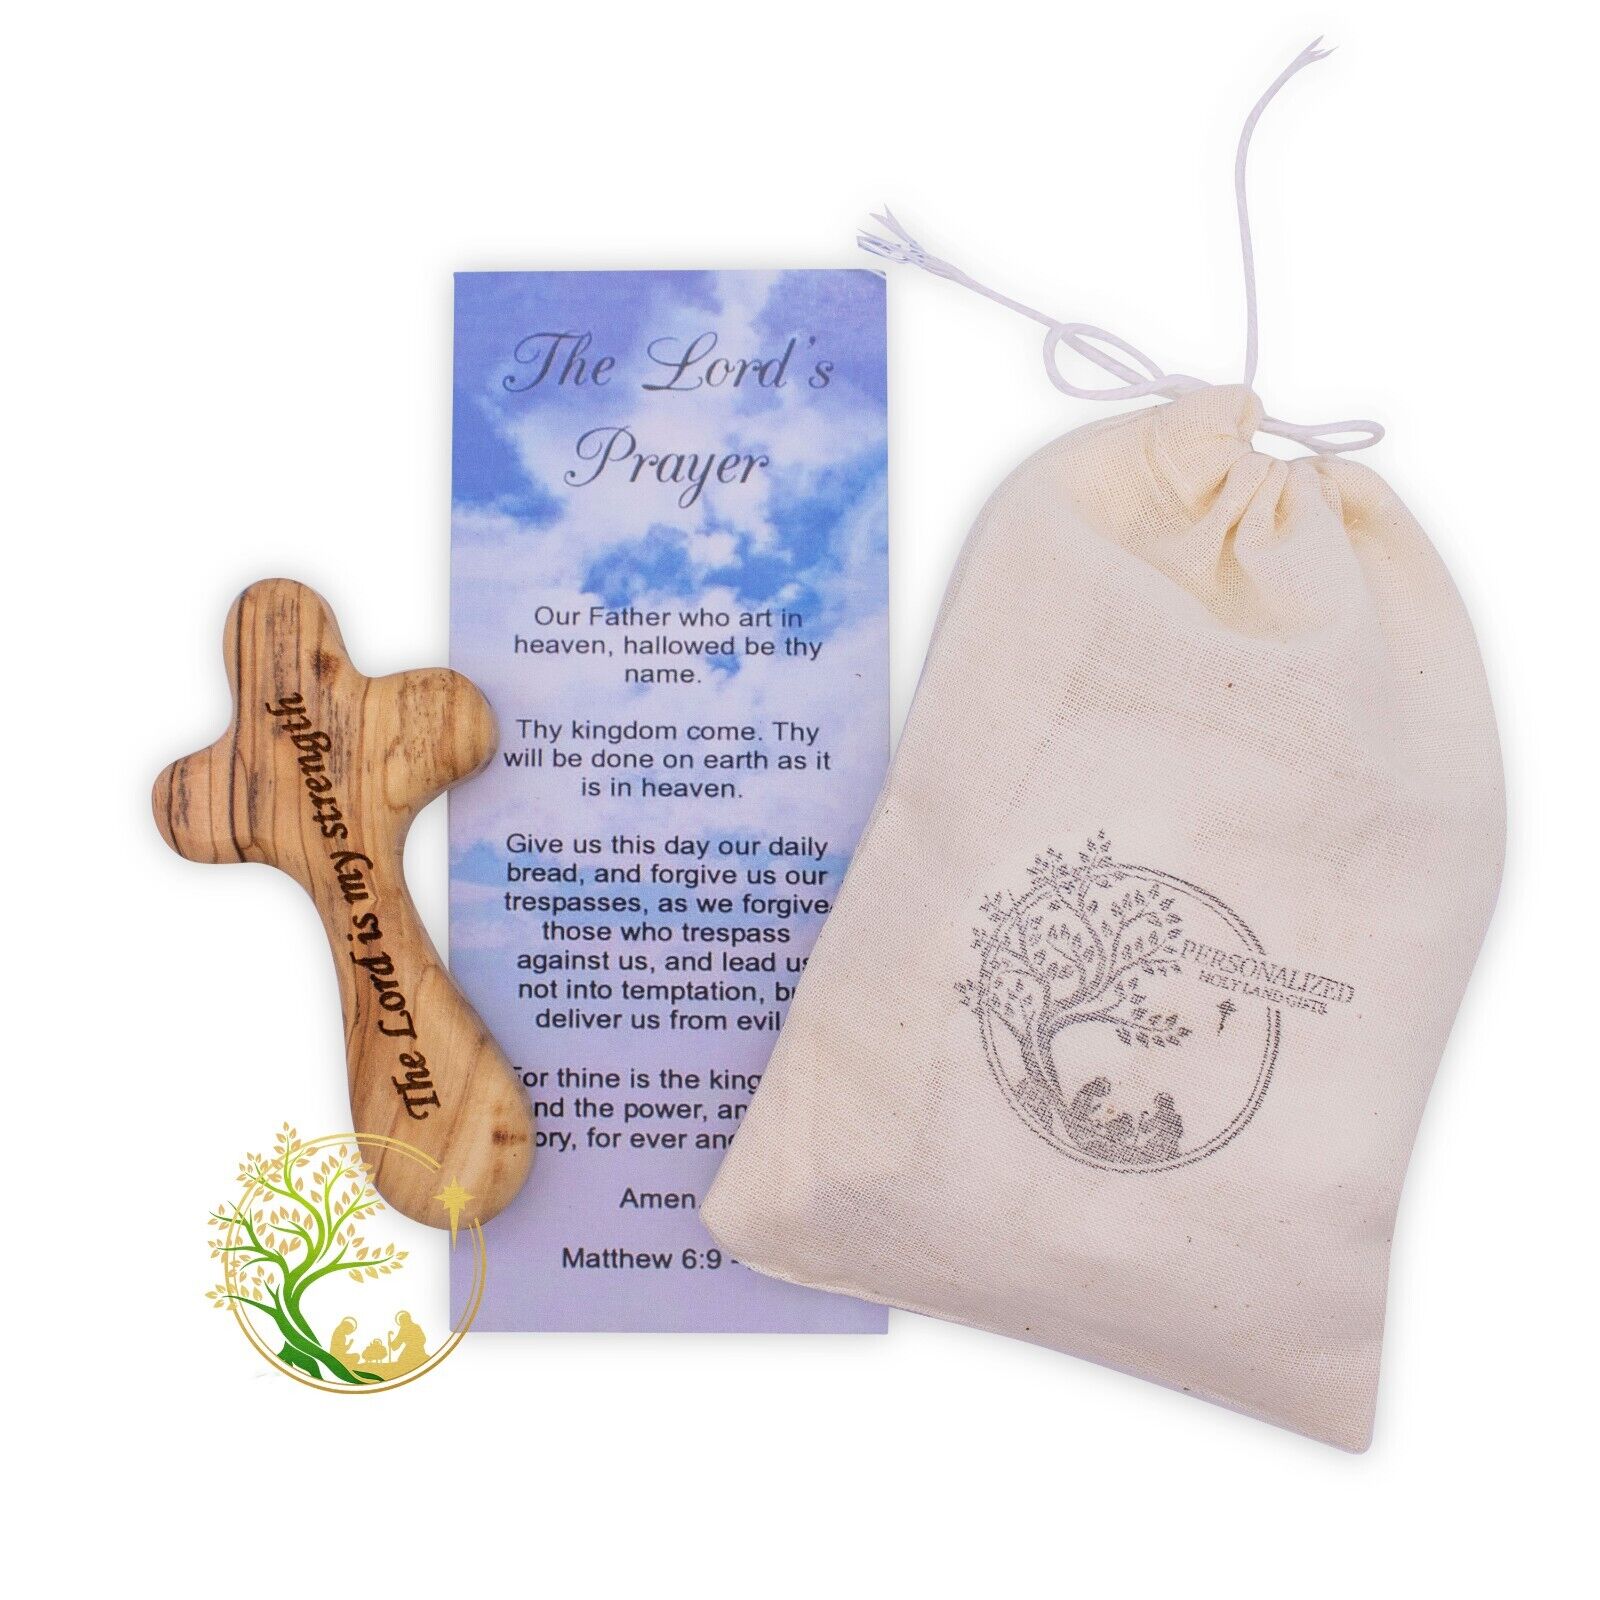 Comfort cross | Holy Land prayer Palm cross made of Olive wood | Handheld cross